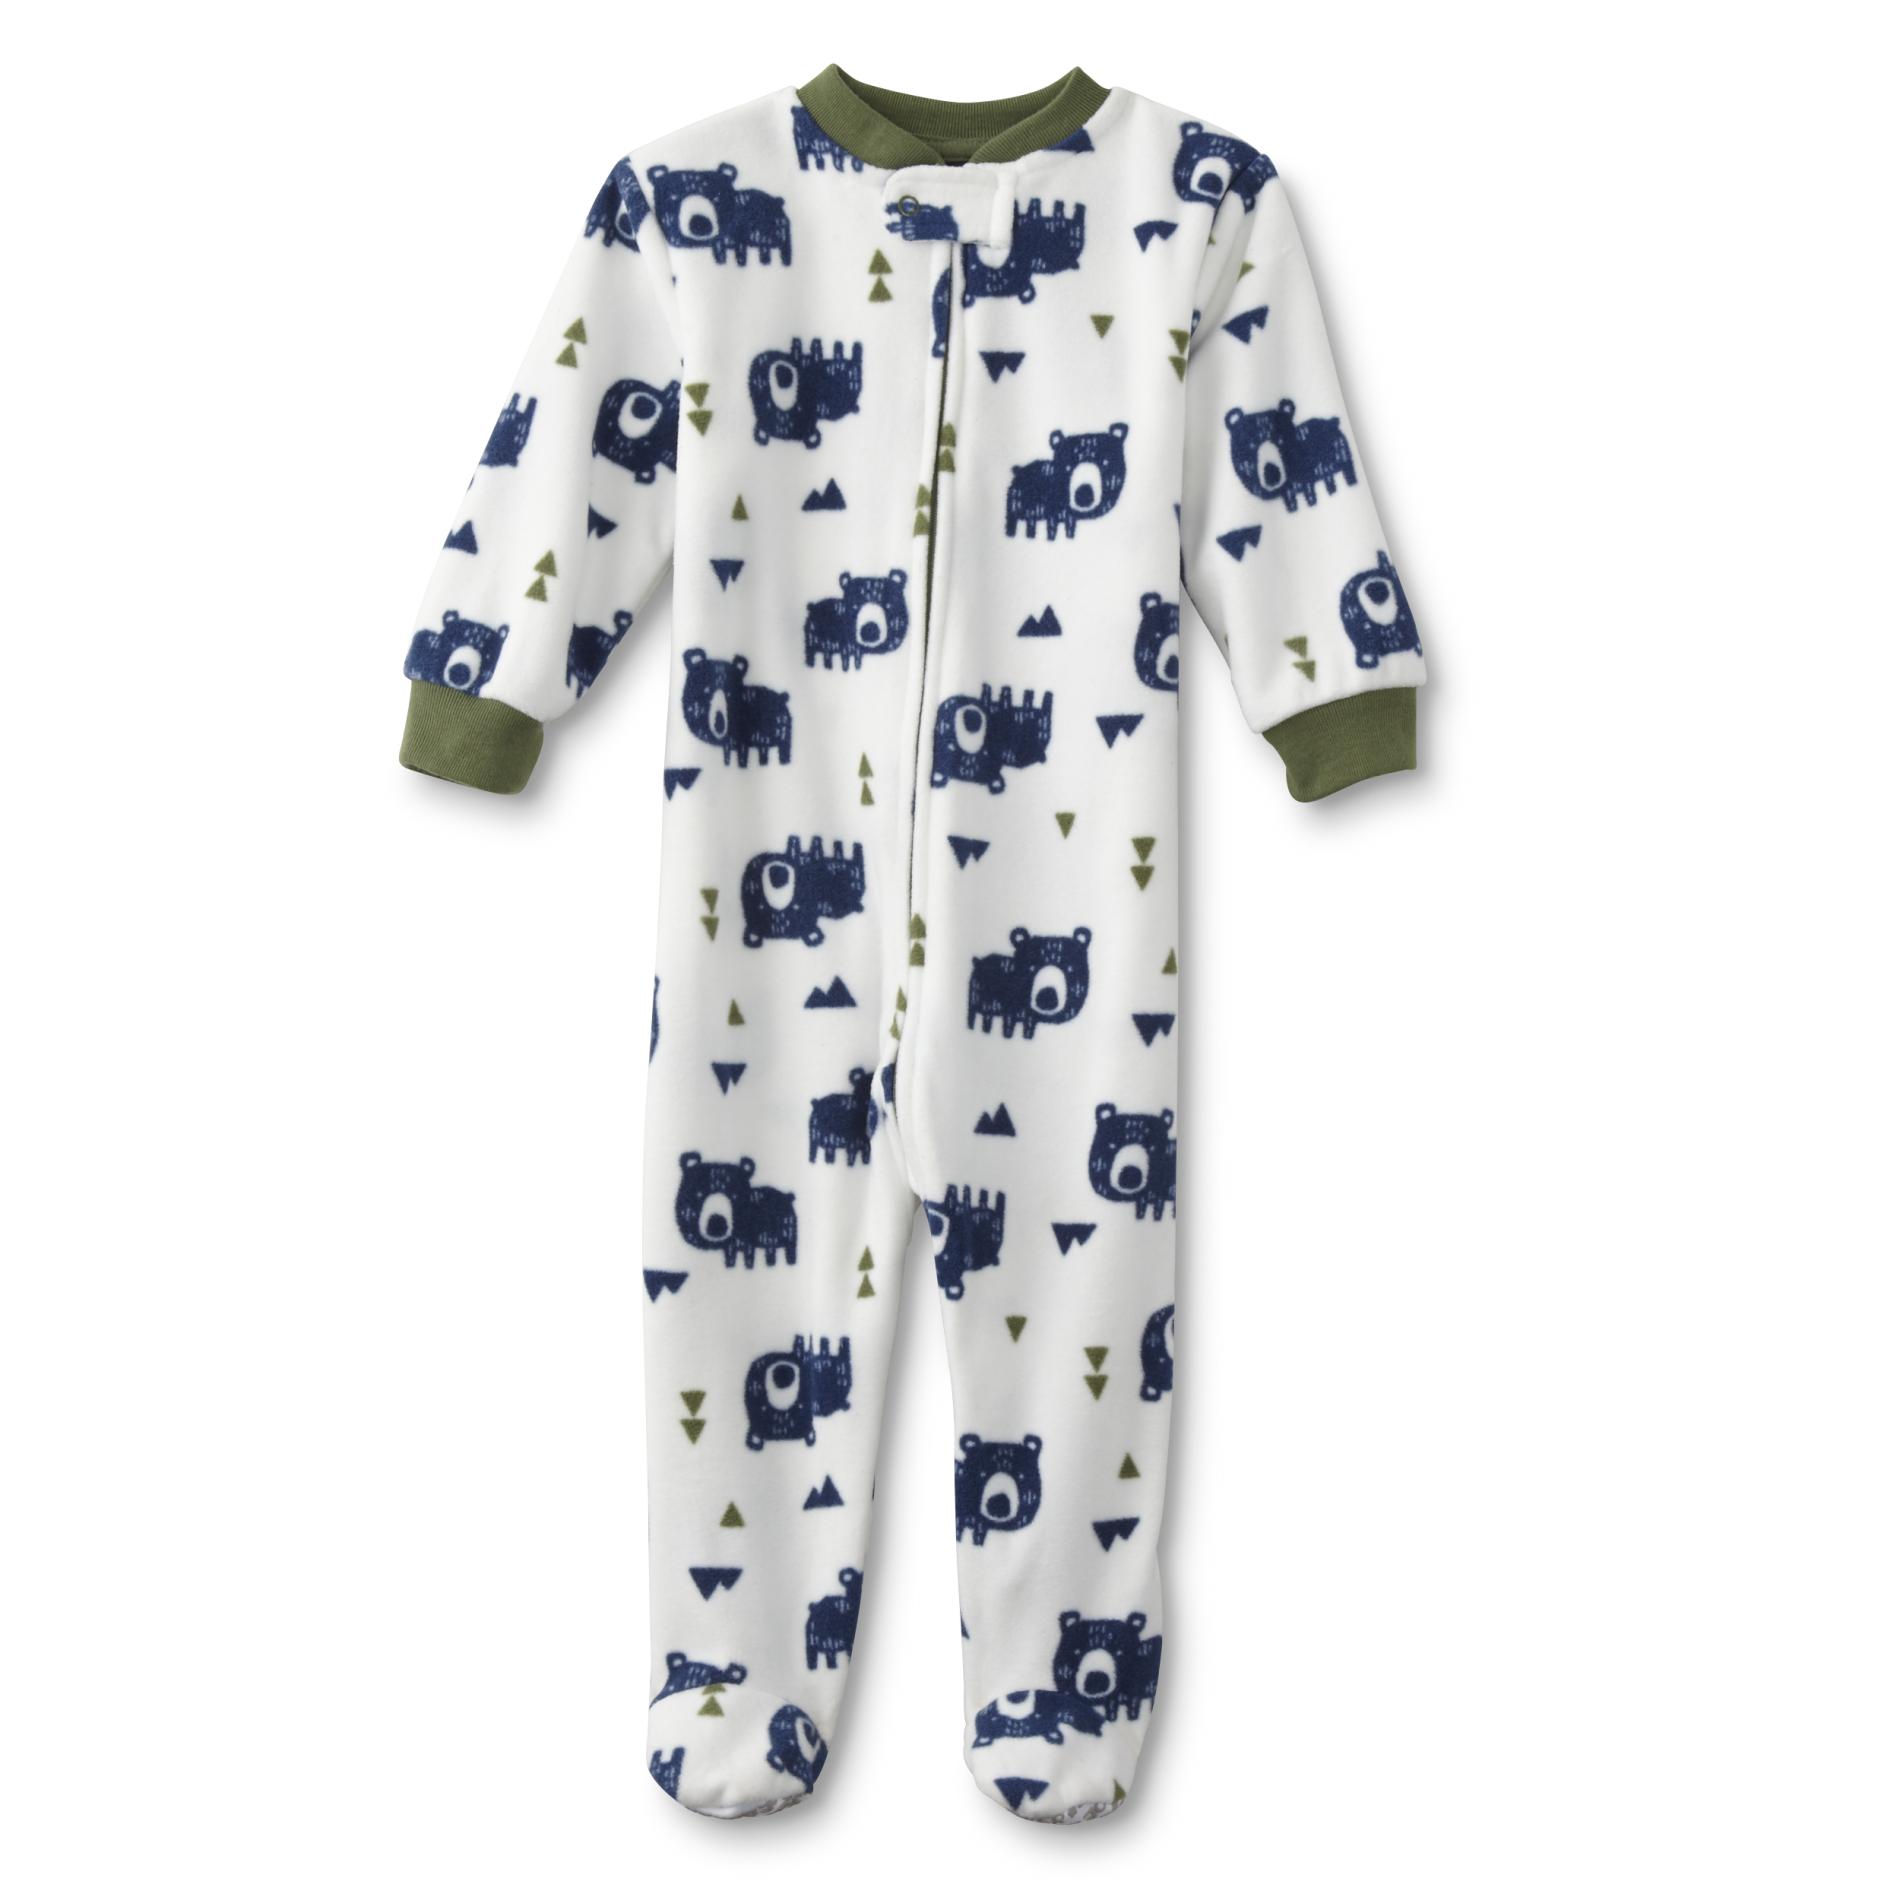 Joe Boxer Infant & Toddler Boy's Sleeper Pajamas - Bears